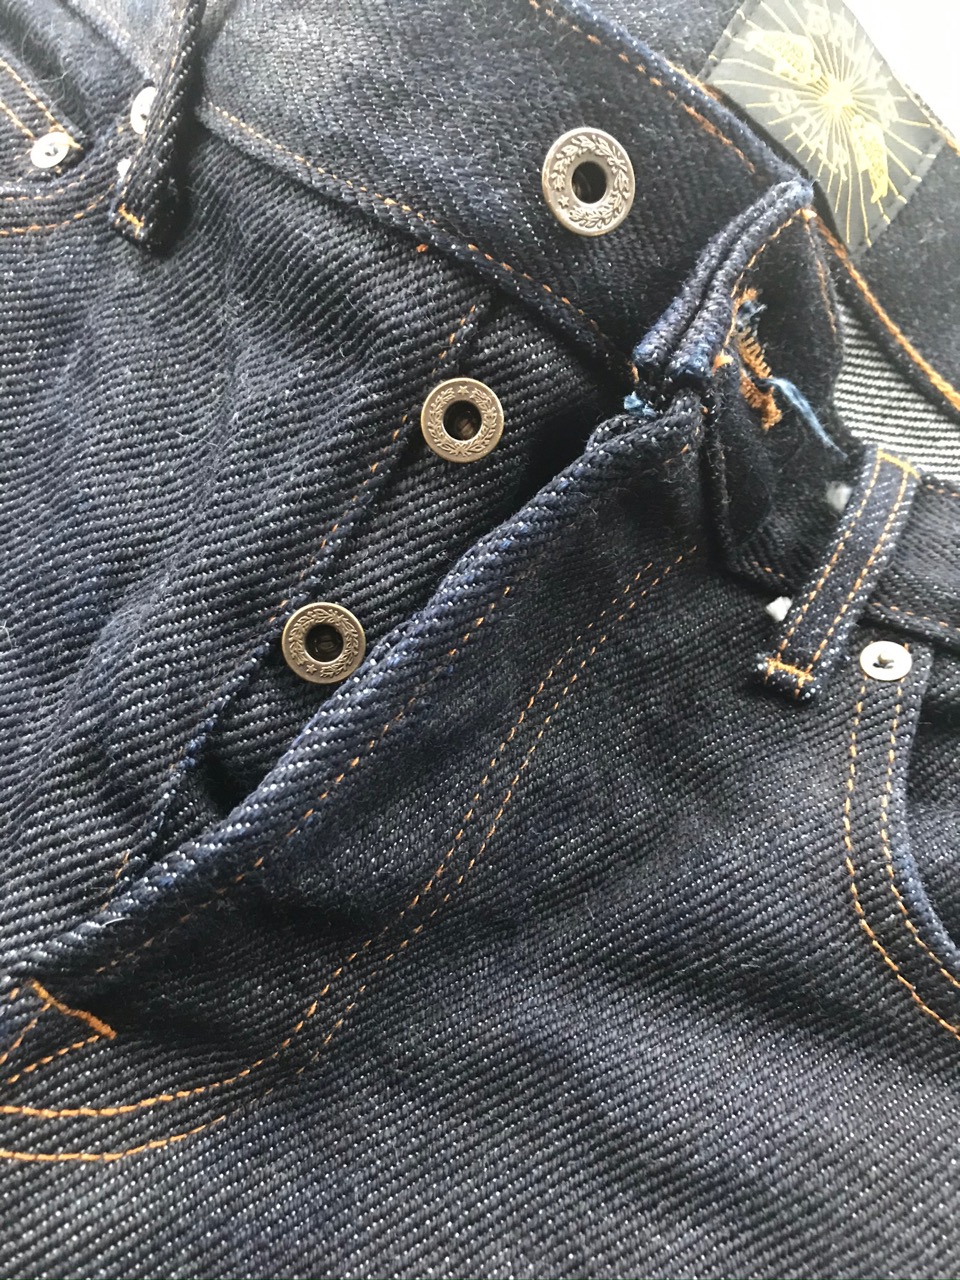 Brave Star Selvedge Jeans 27 oz. 36 x 30 HEAVY | The Fedora Lounge